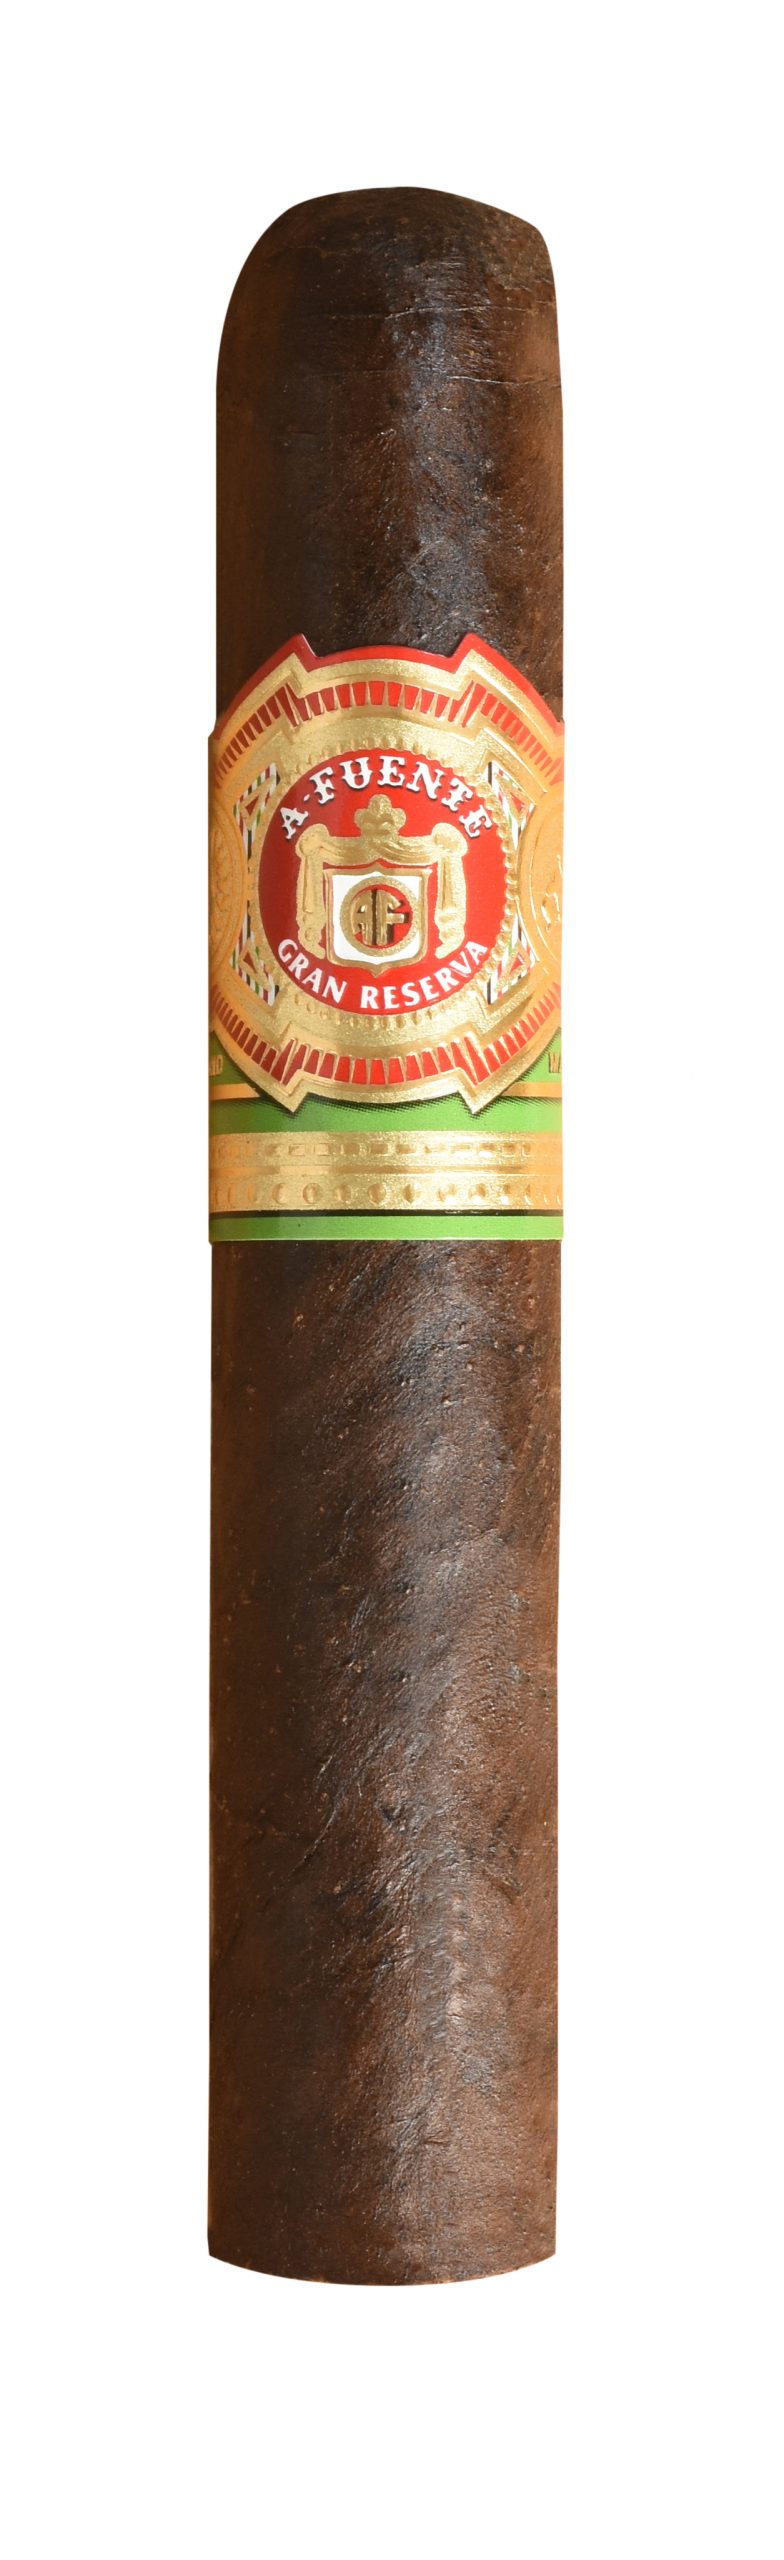 single arturo fuente gran reserva rothschild maduro cigar